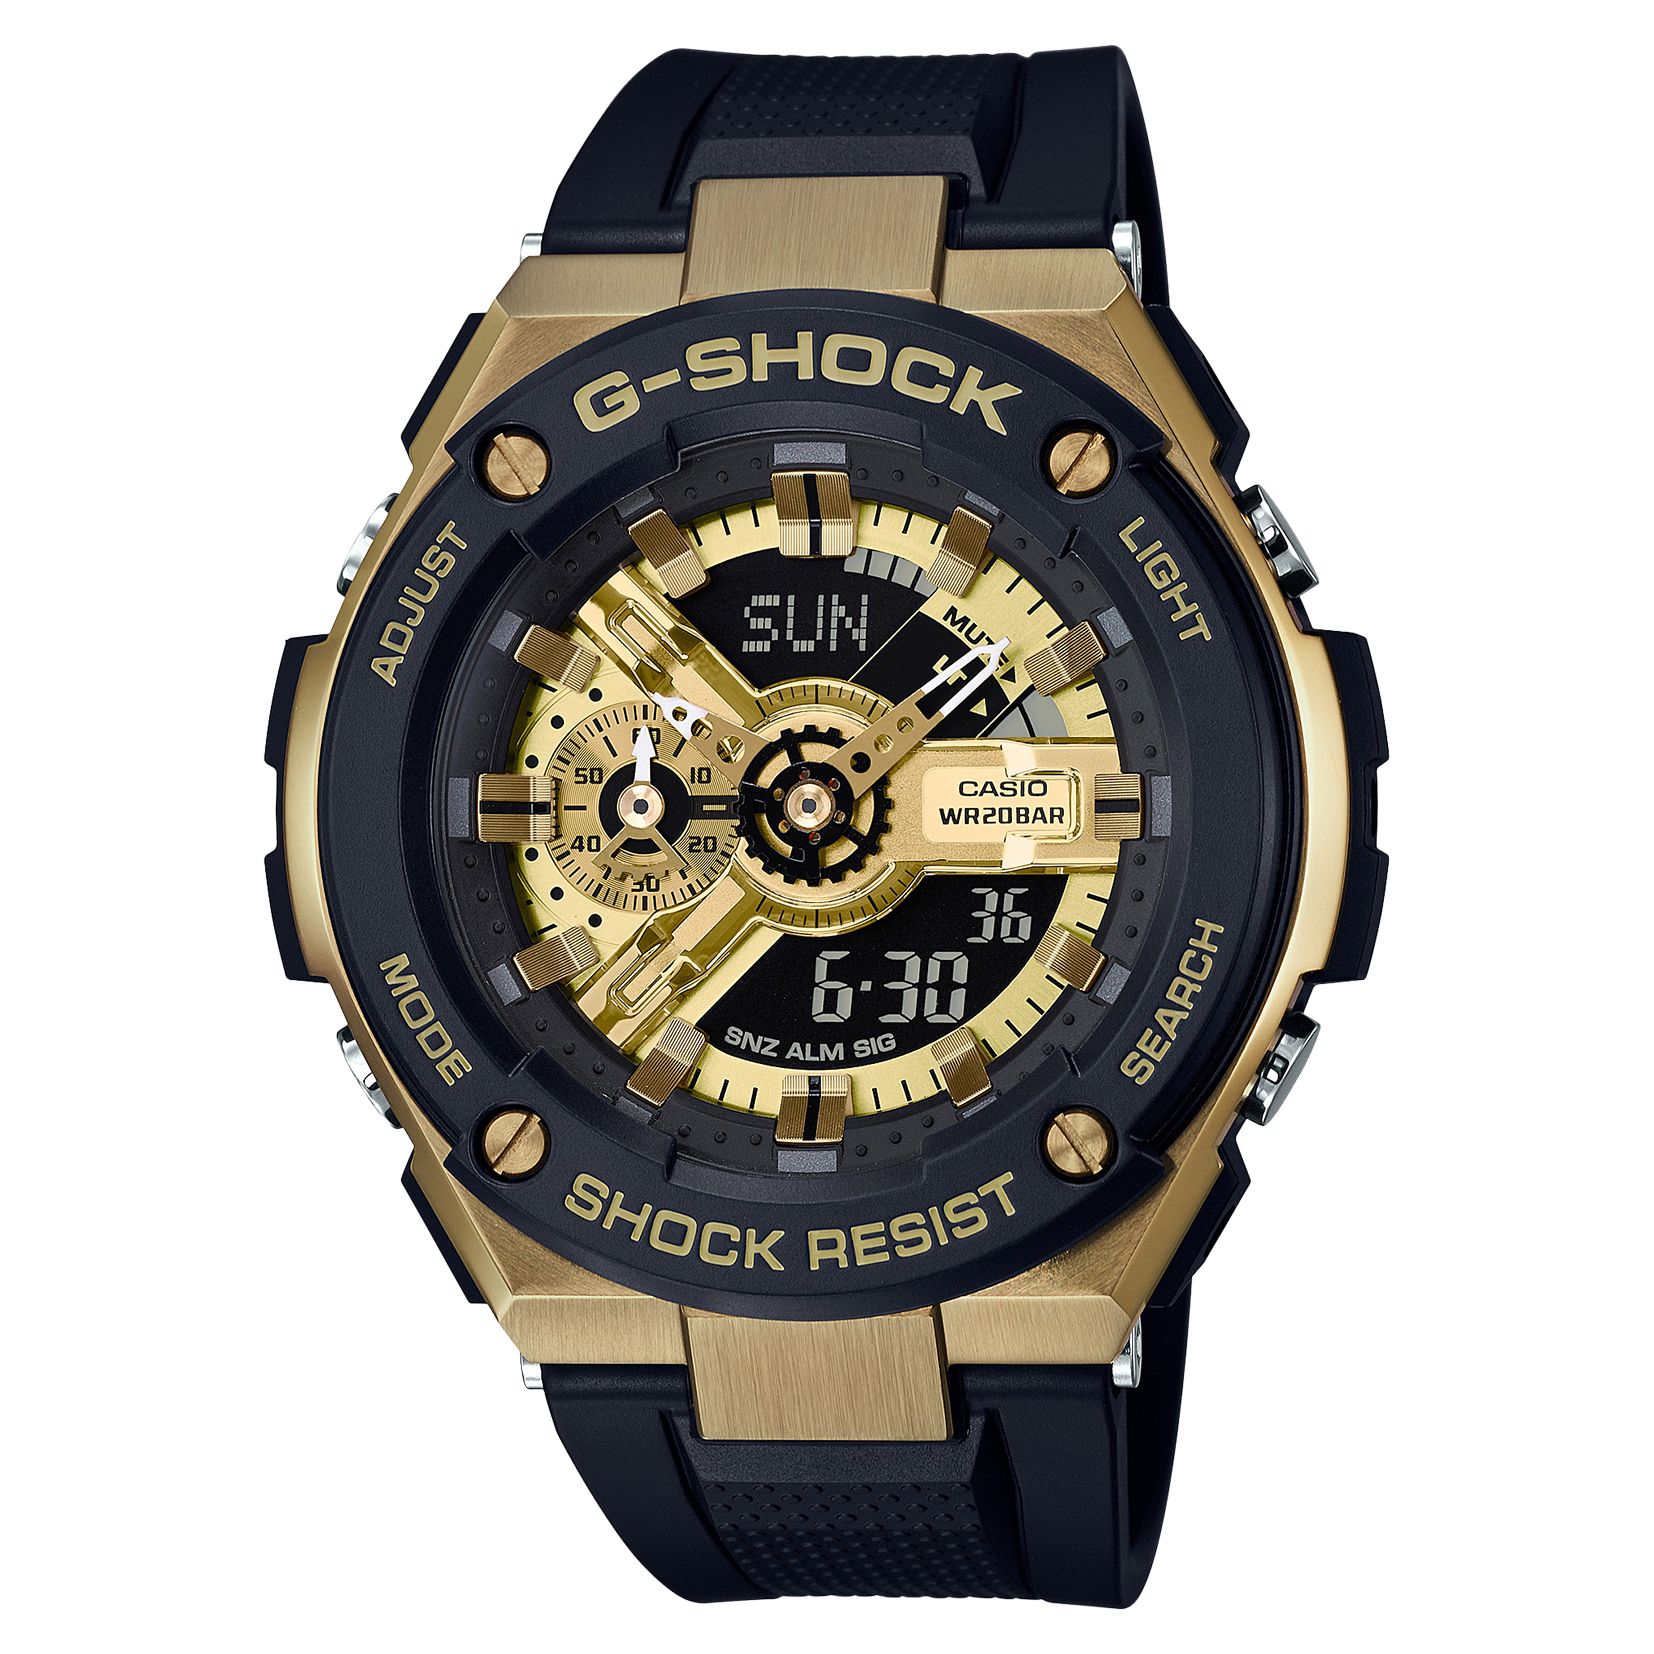 Casio GST-400G-1A9ER Men's G-Shock Chronograph World Time Resin Strap Watch, Black/Gold